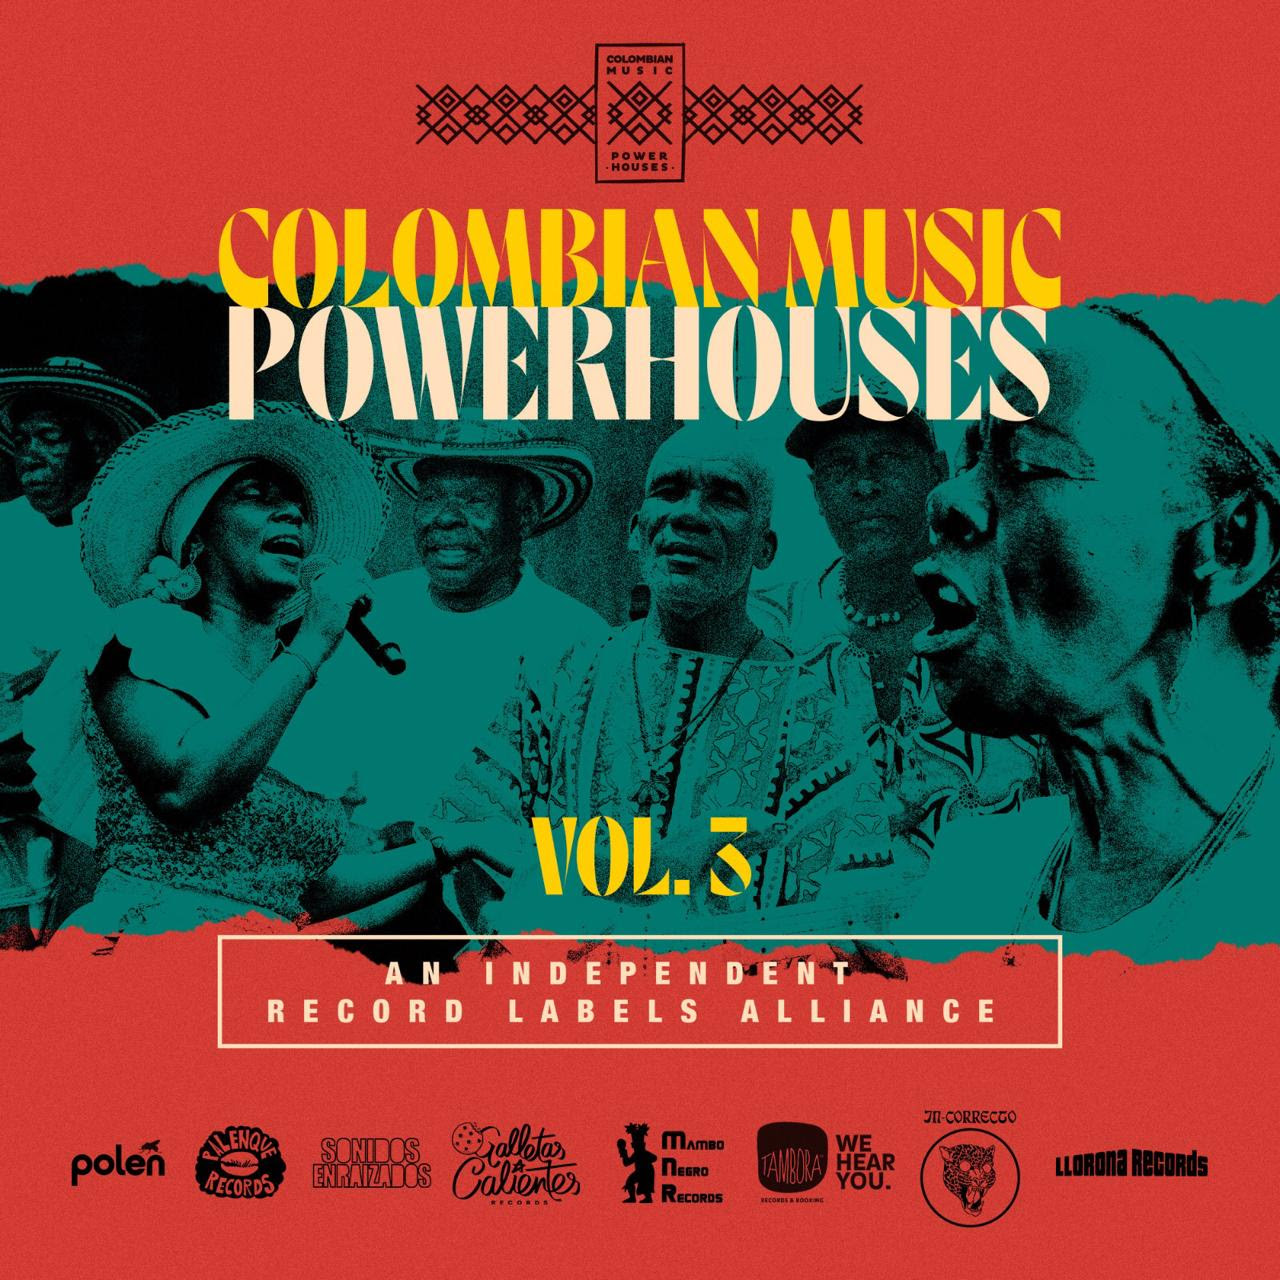  Llorona Records presenta “Colombian Music Powerhouses vol. 3”